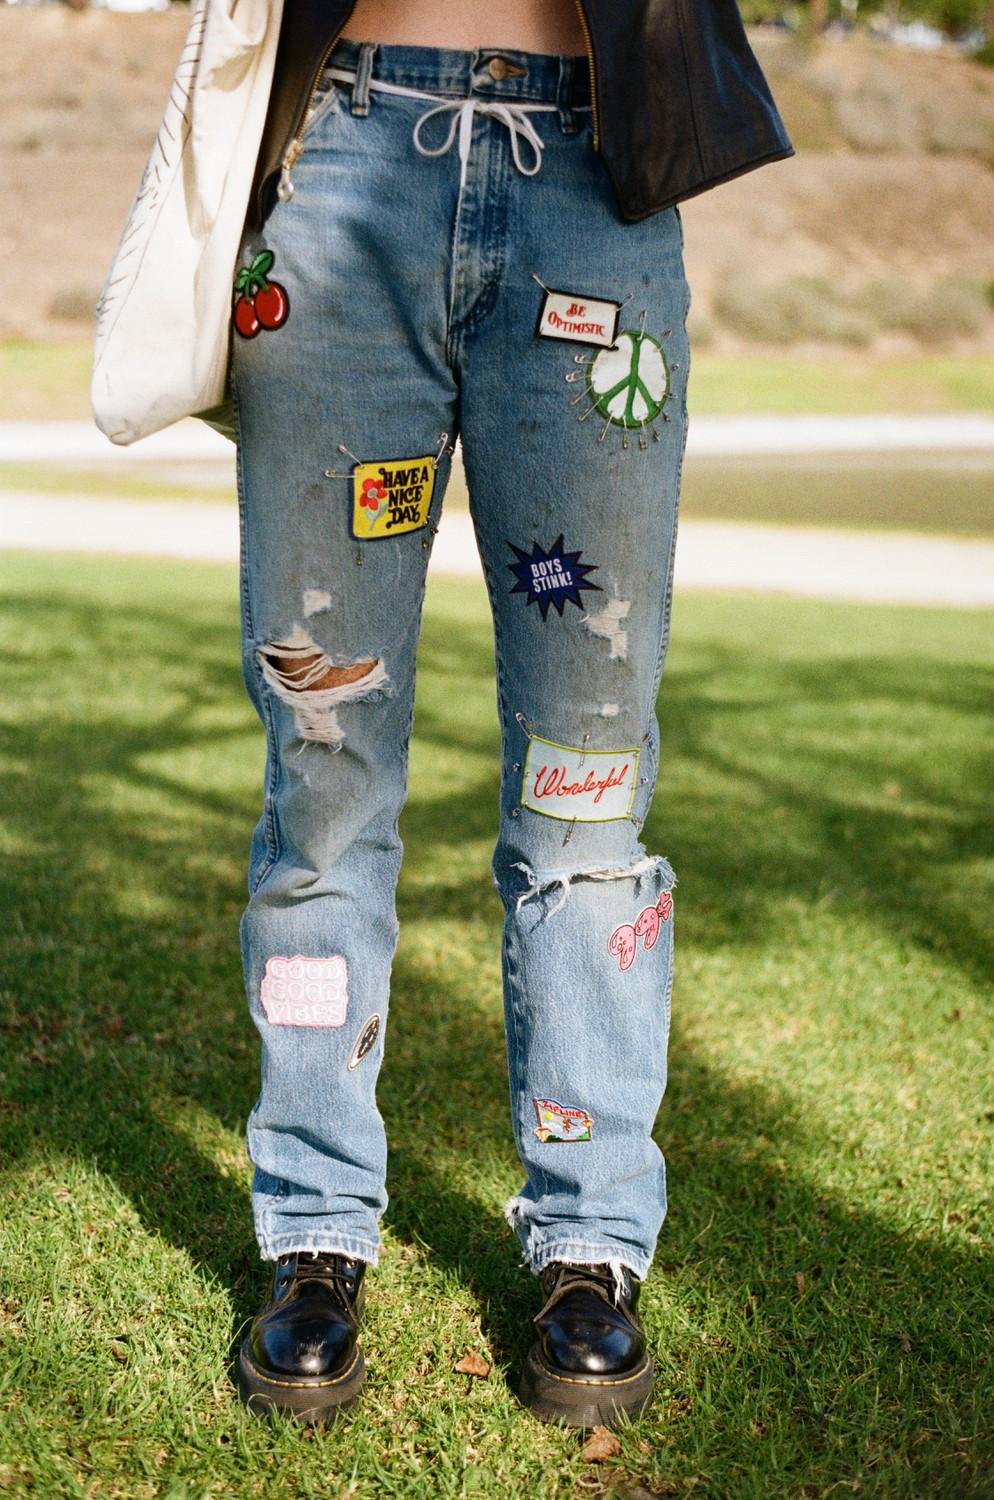 Chloe Jurdana's patchwork jeans on Lomography 100